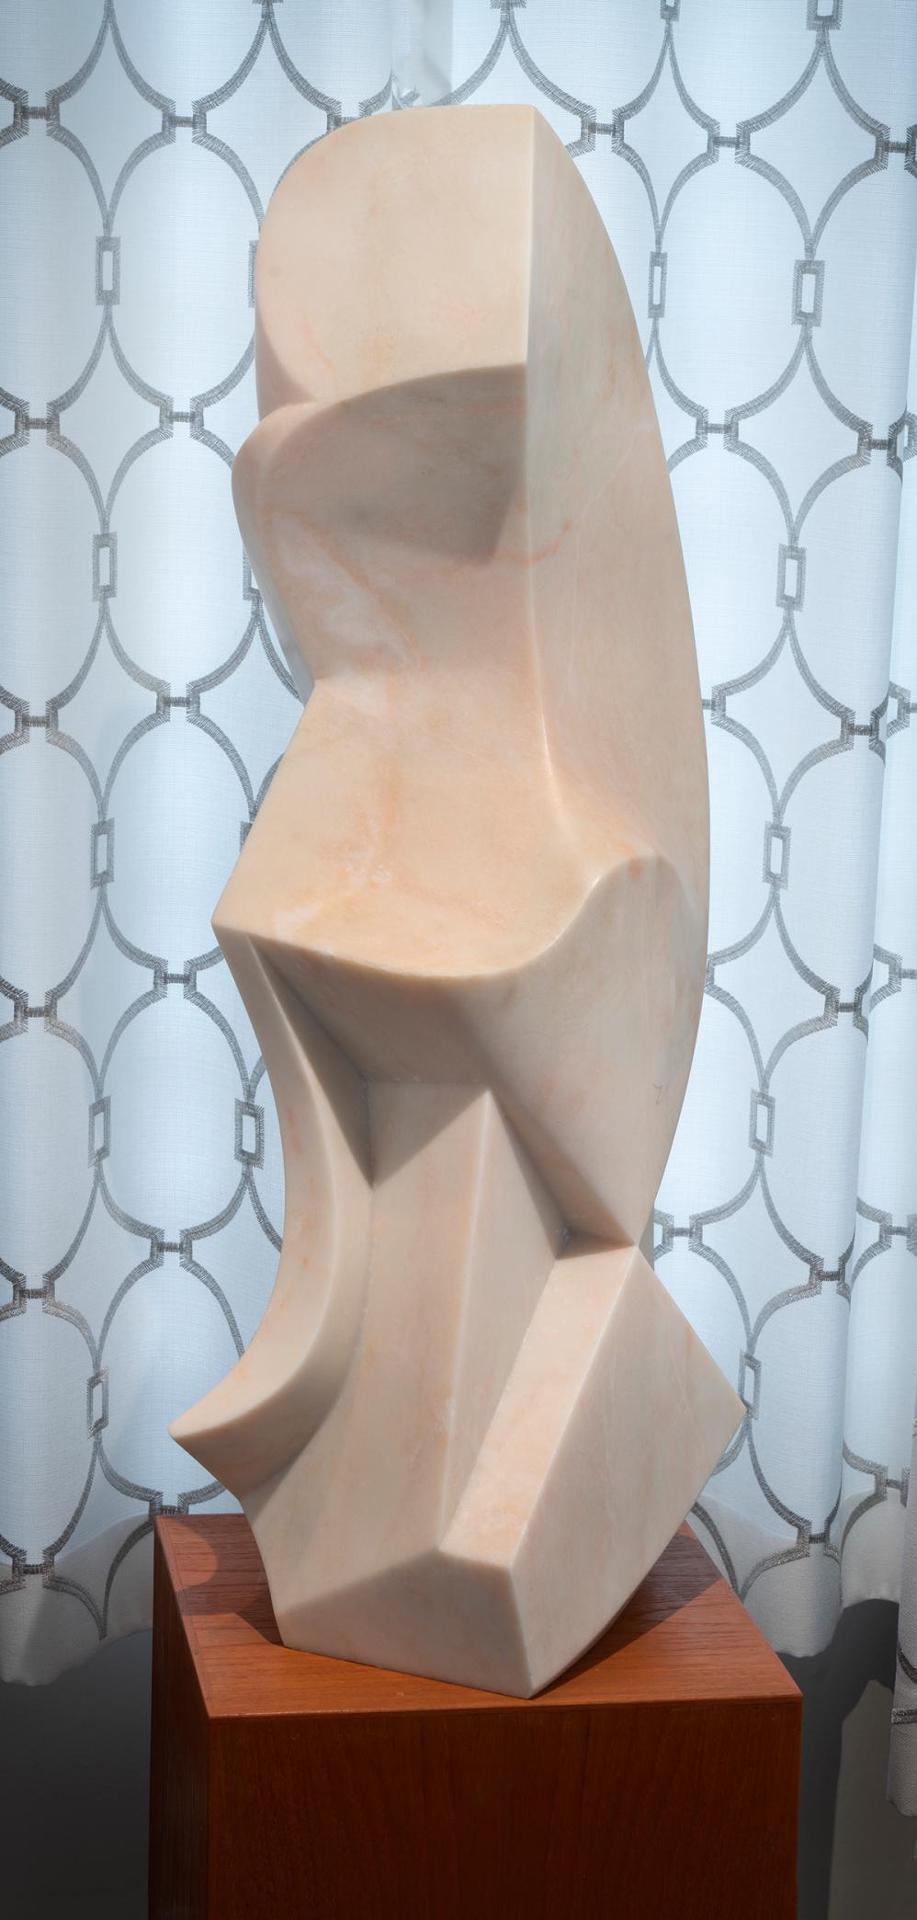 Marigold Sherstobitoff (1934) - Untitled - Tall Sculpture